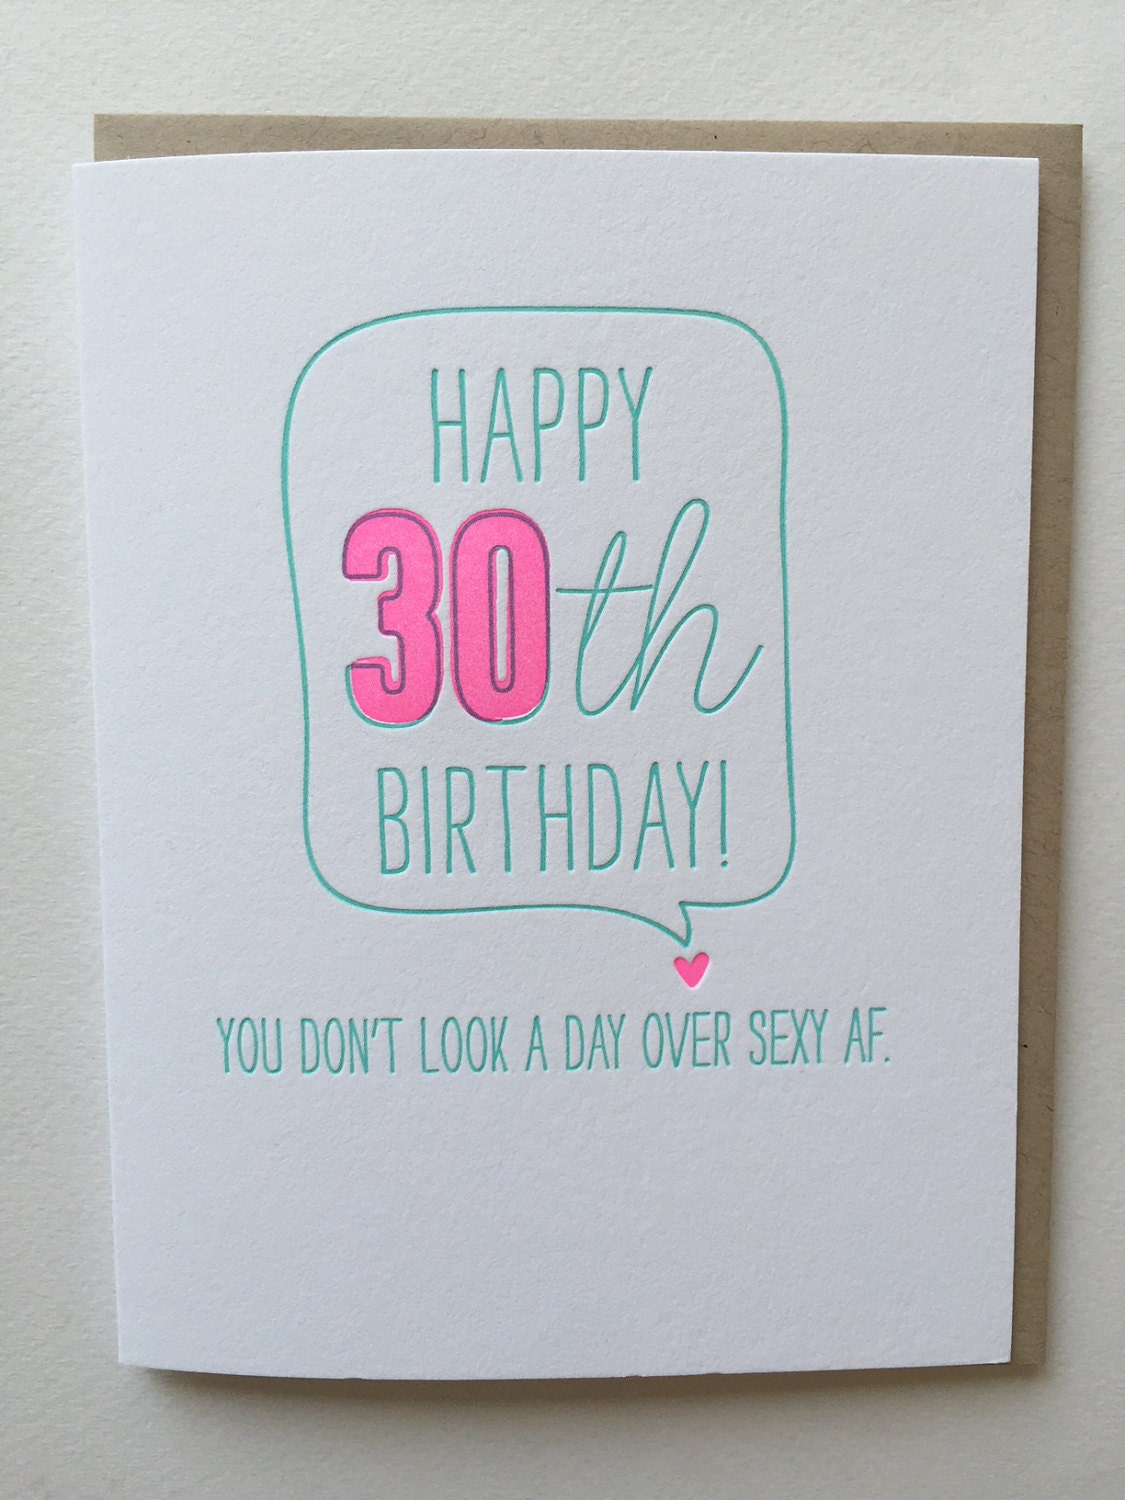 30th-birthday-card-funny-card-for-30th-birthday-letterpress